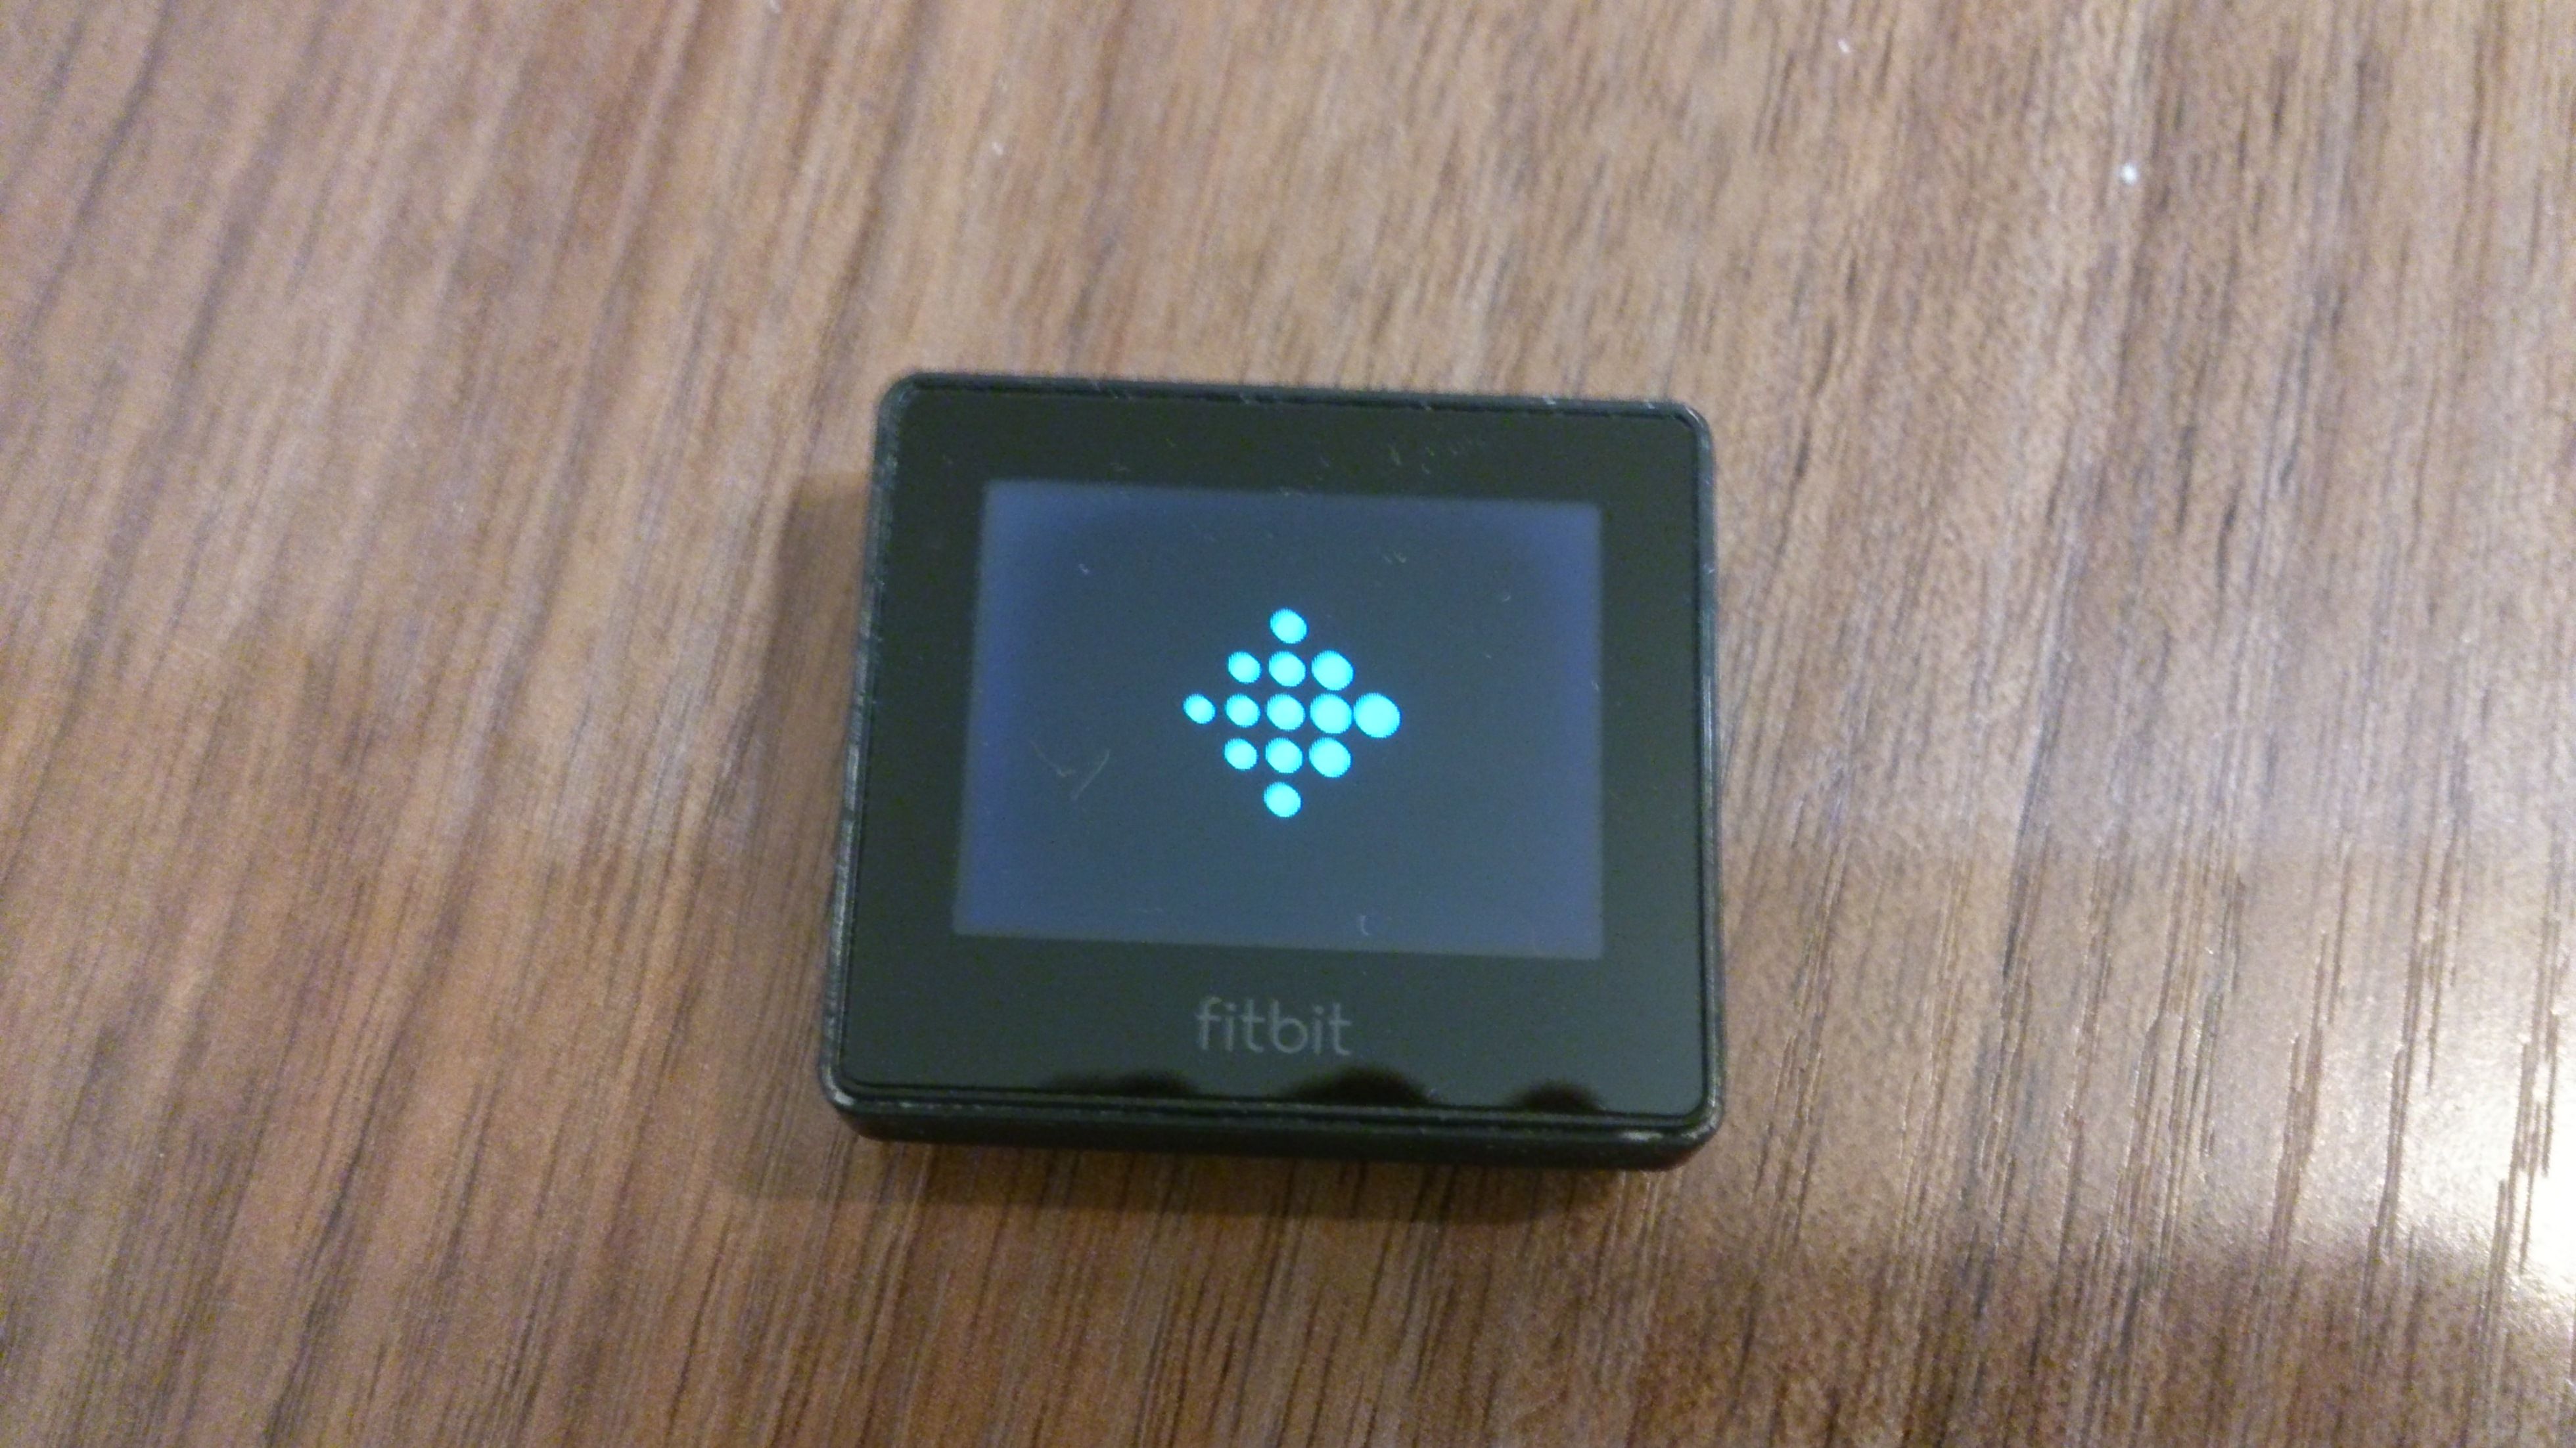 Blaze keep restarting - Fitbit Community